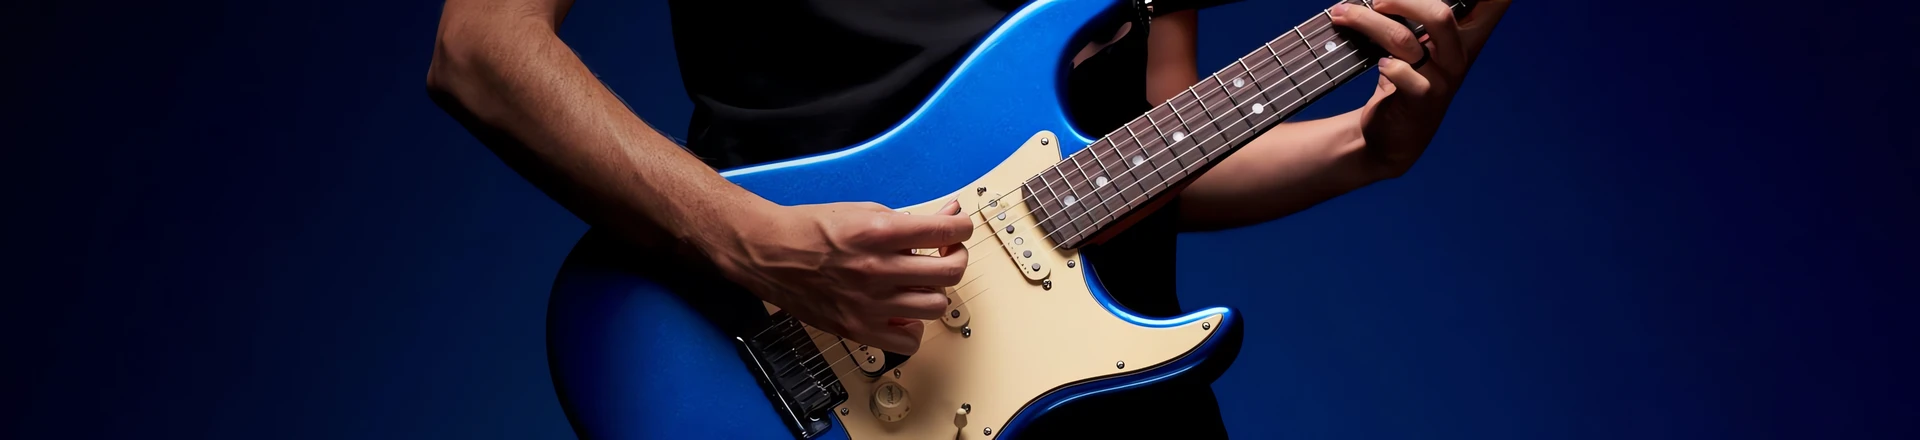 Fender American Ultra - nowa, rewolucyjna seria gitar